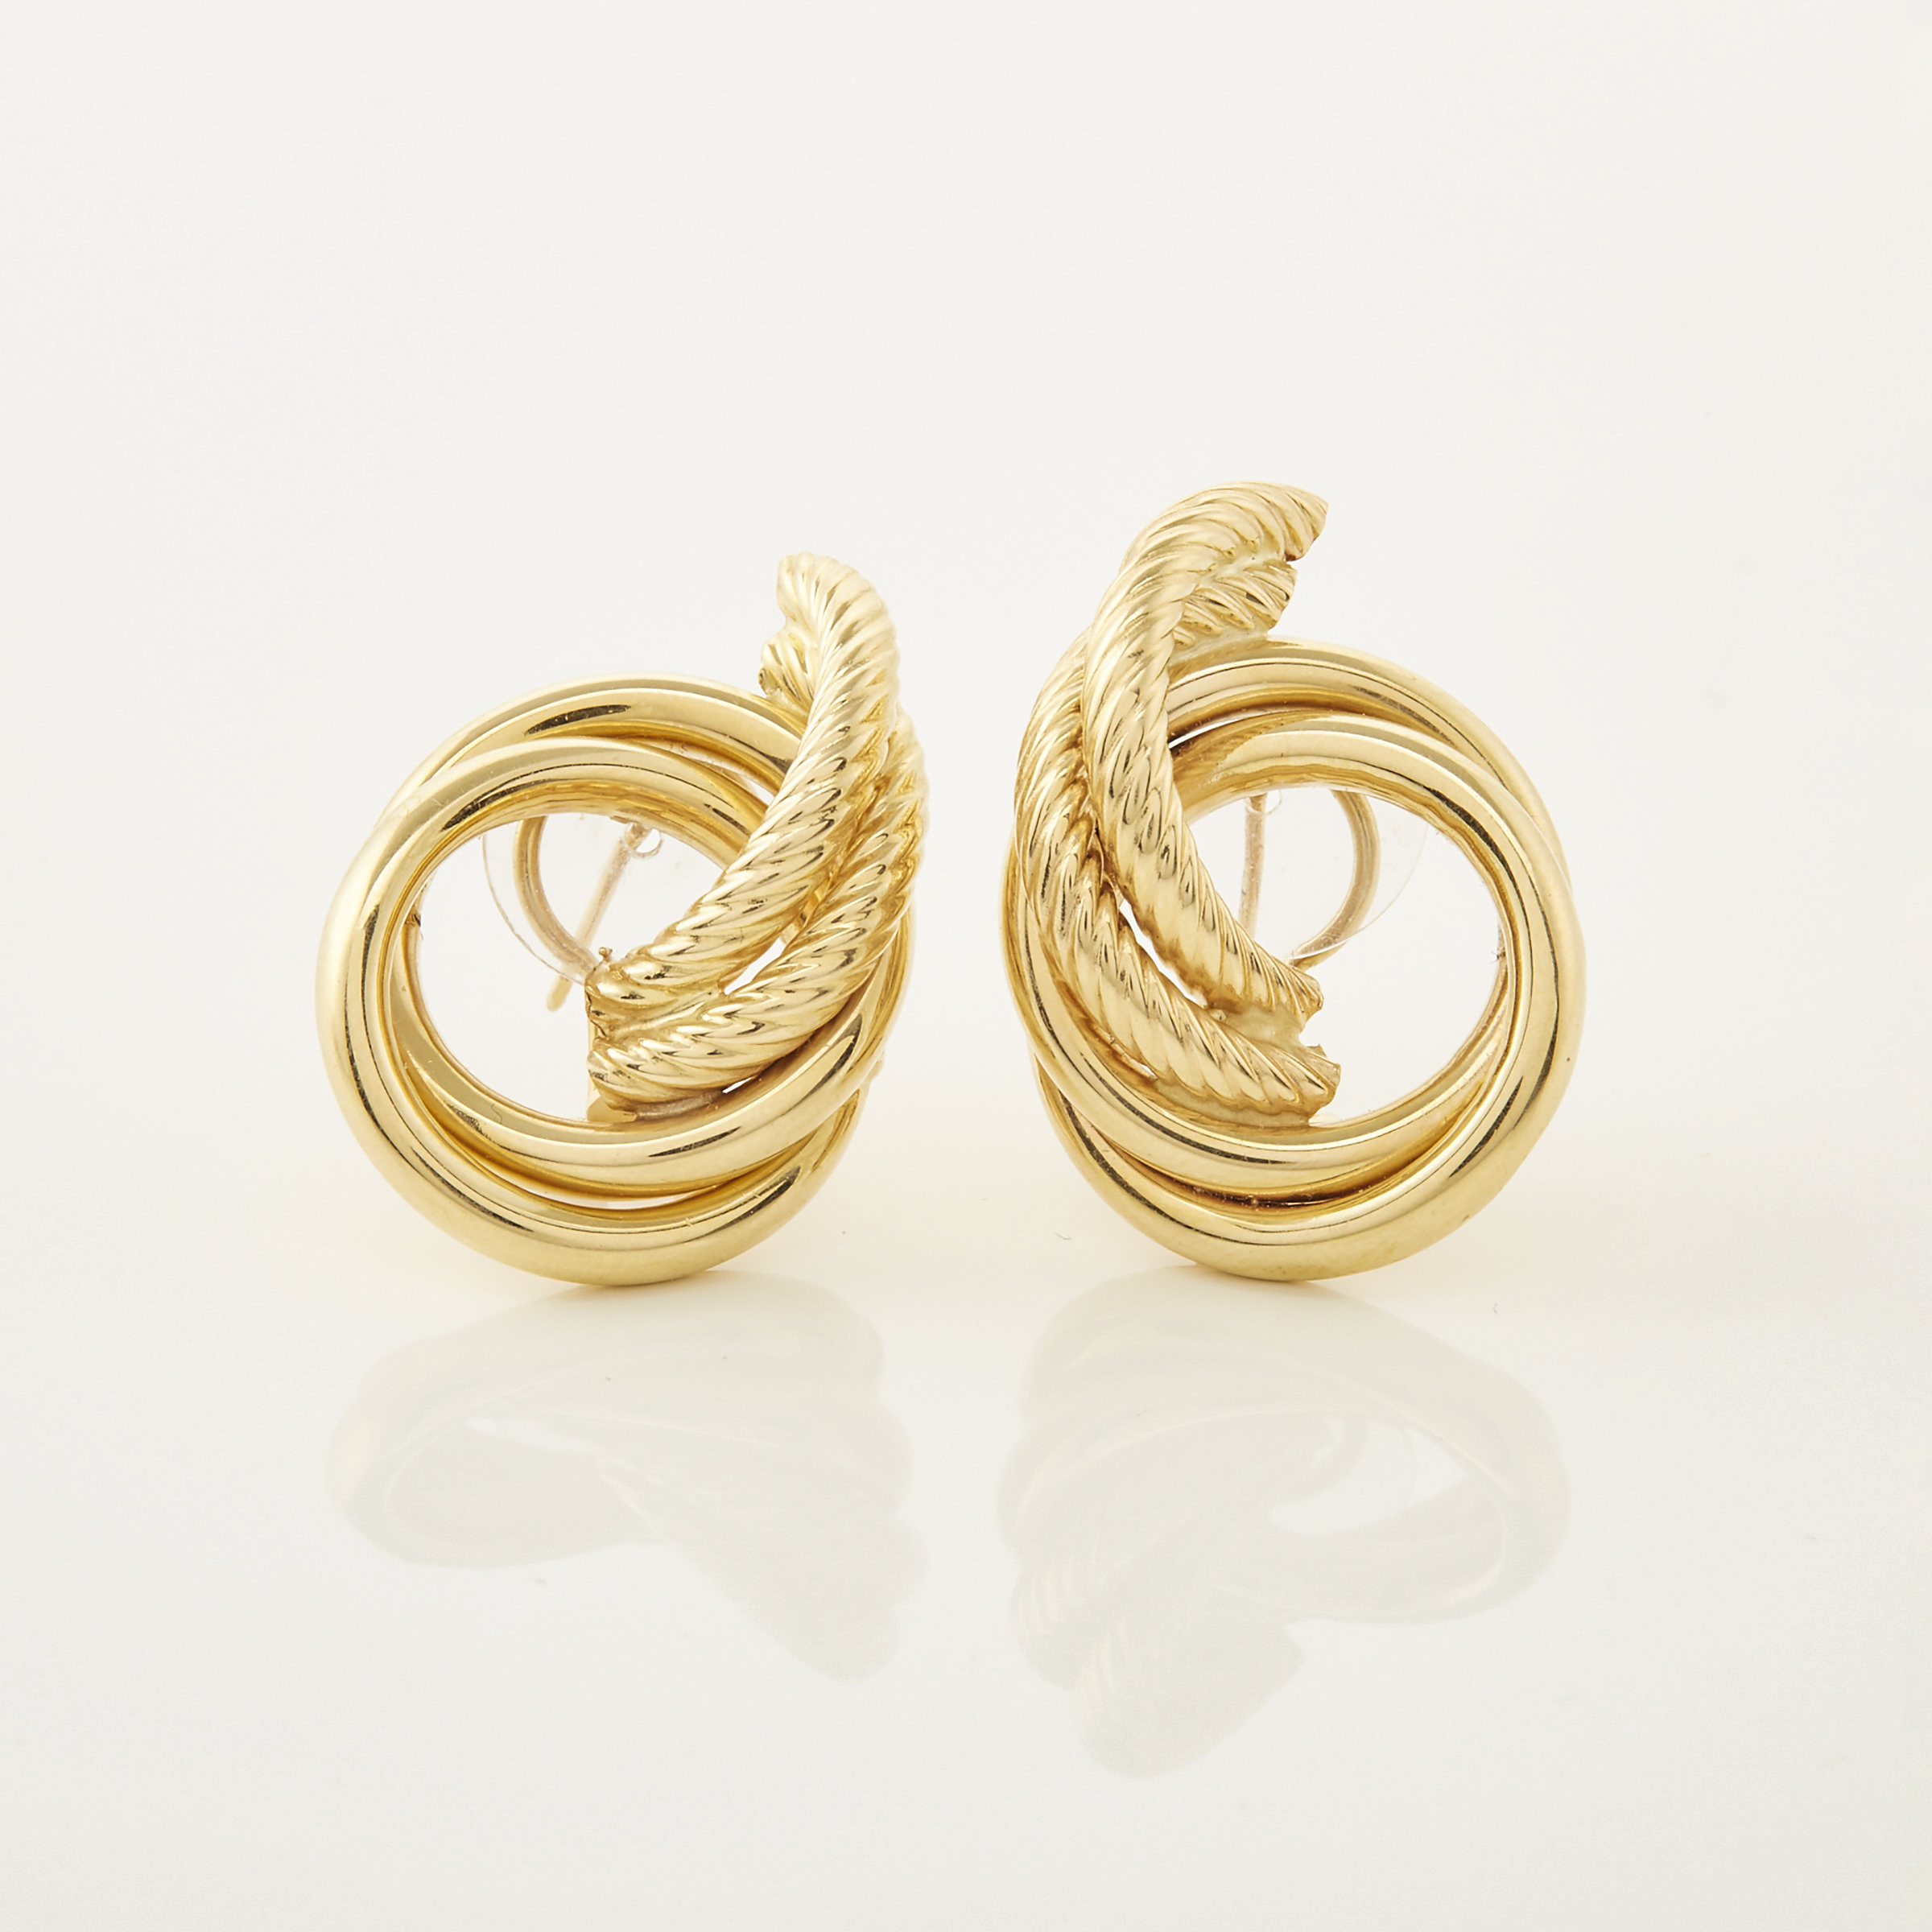 Pair of 14k Yellow Gold Swirl Earrings